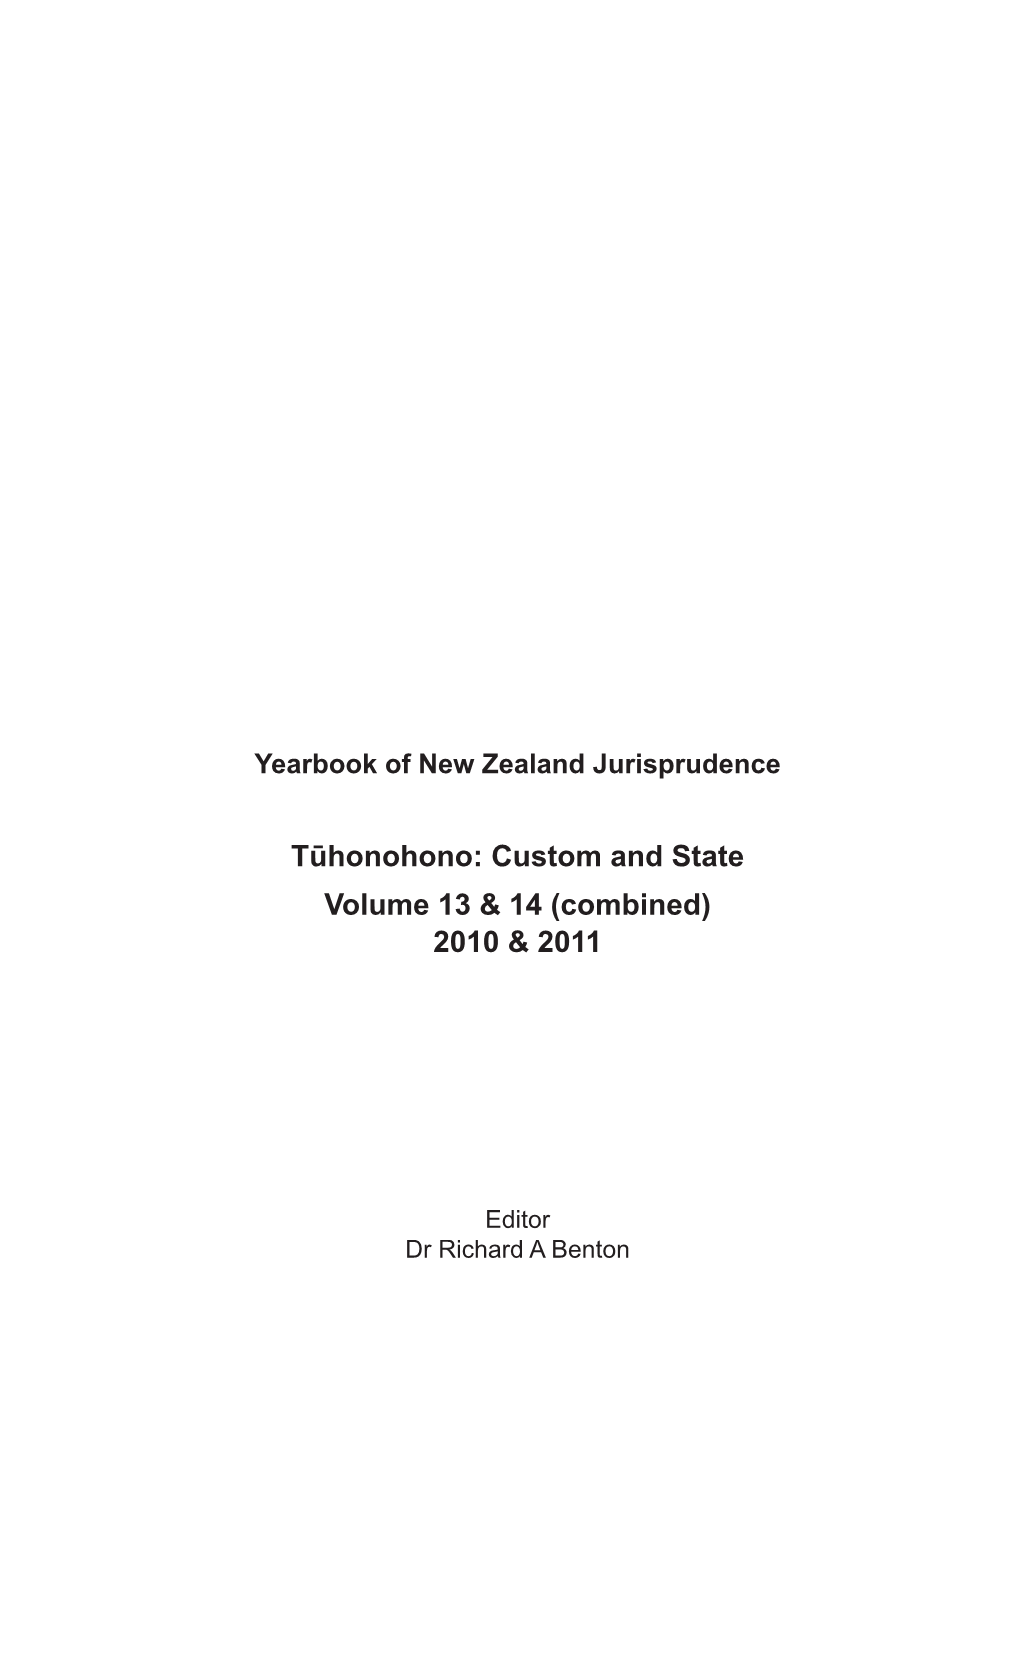 Tūhonohono: Custom and State Volume 13 & 14 (Combined) 2010